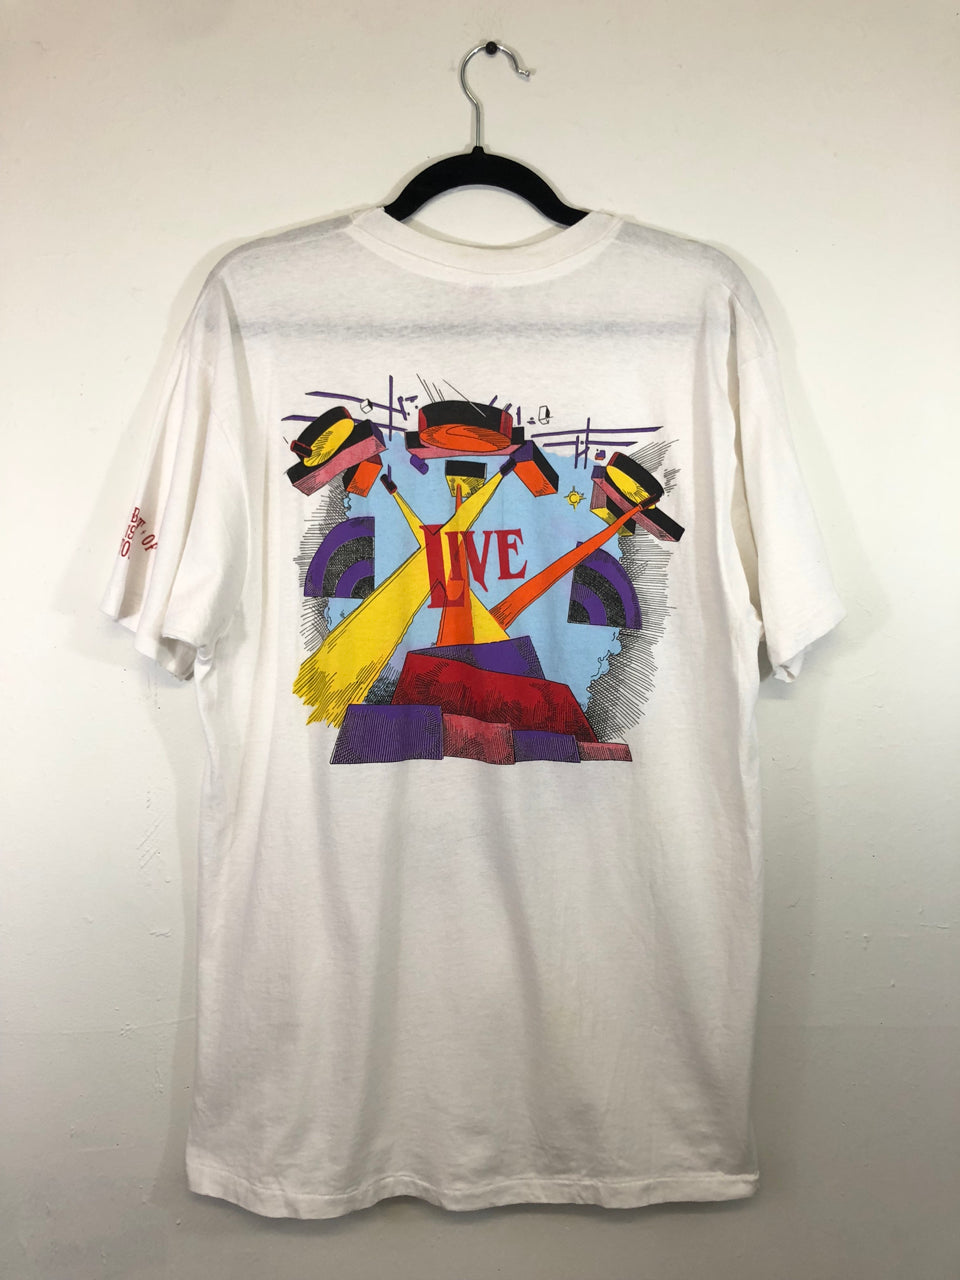 Stevie Nicks 1989 Tour T-Shirt (As Is)